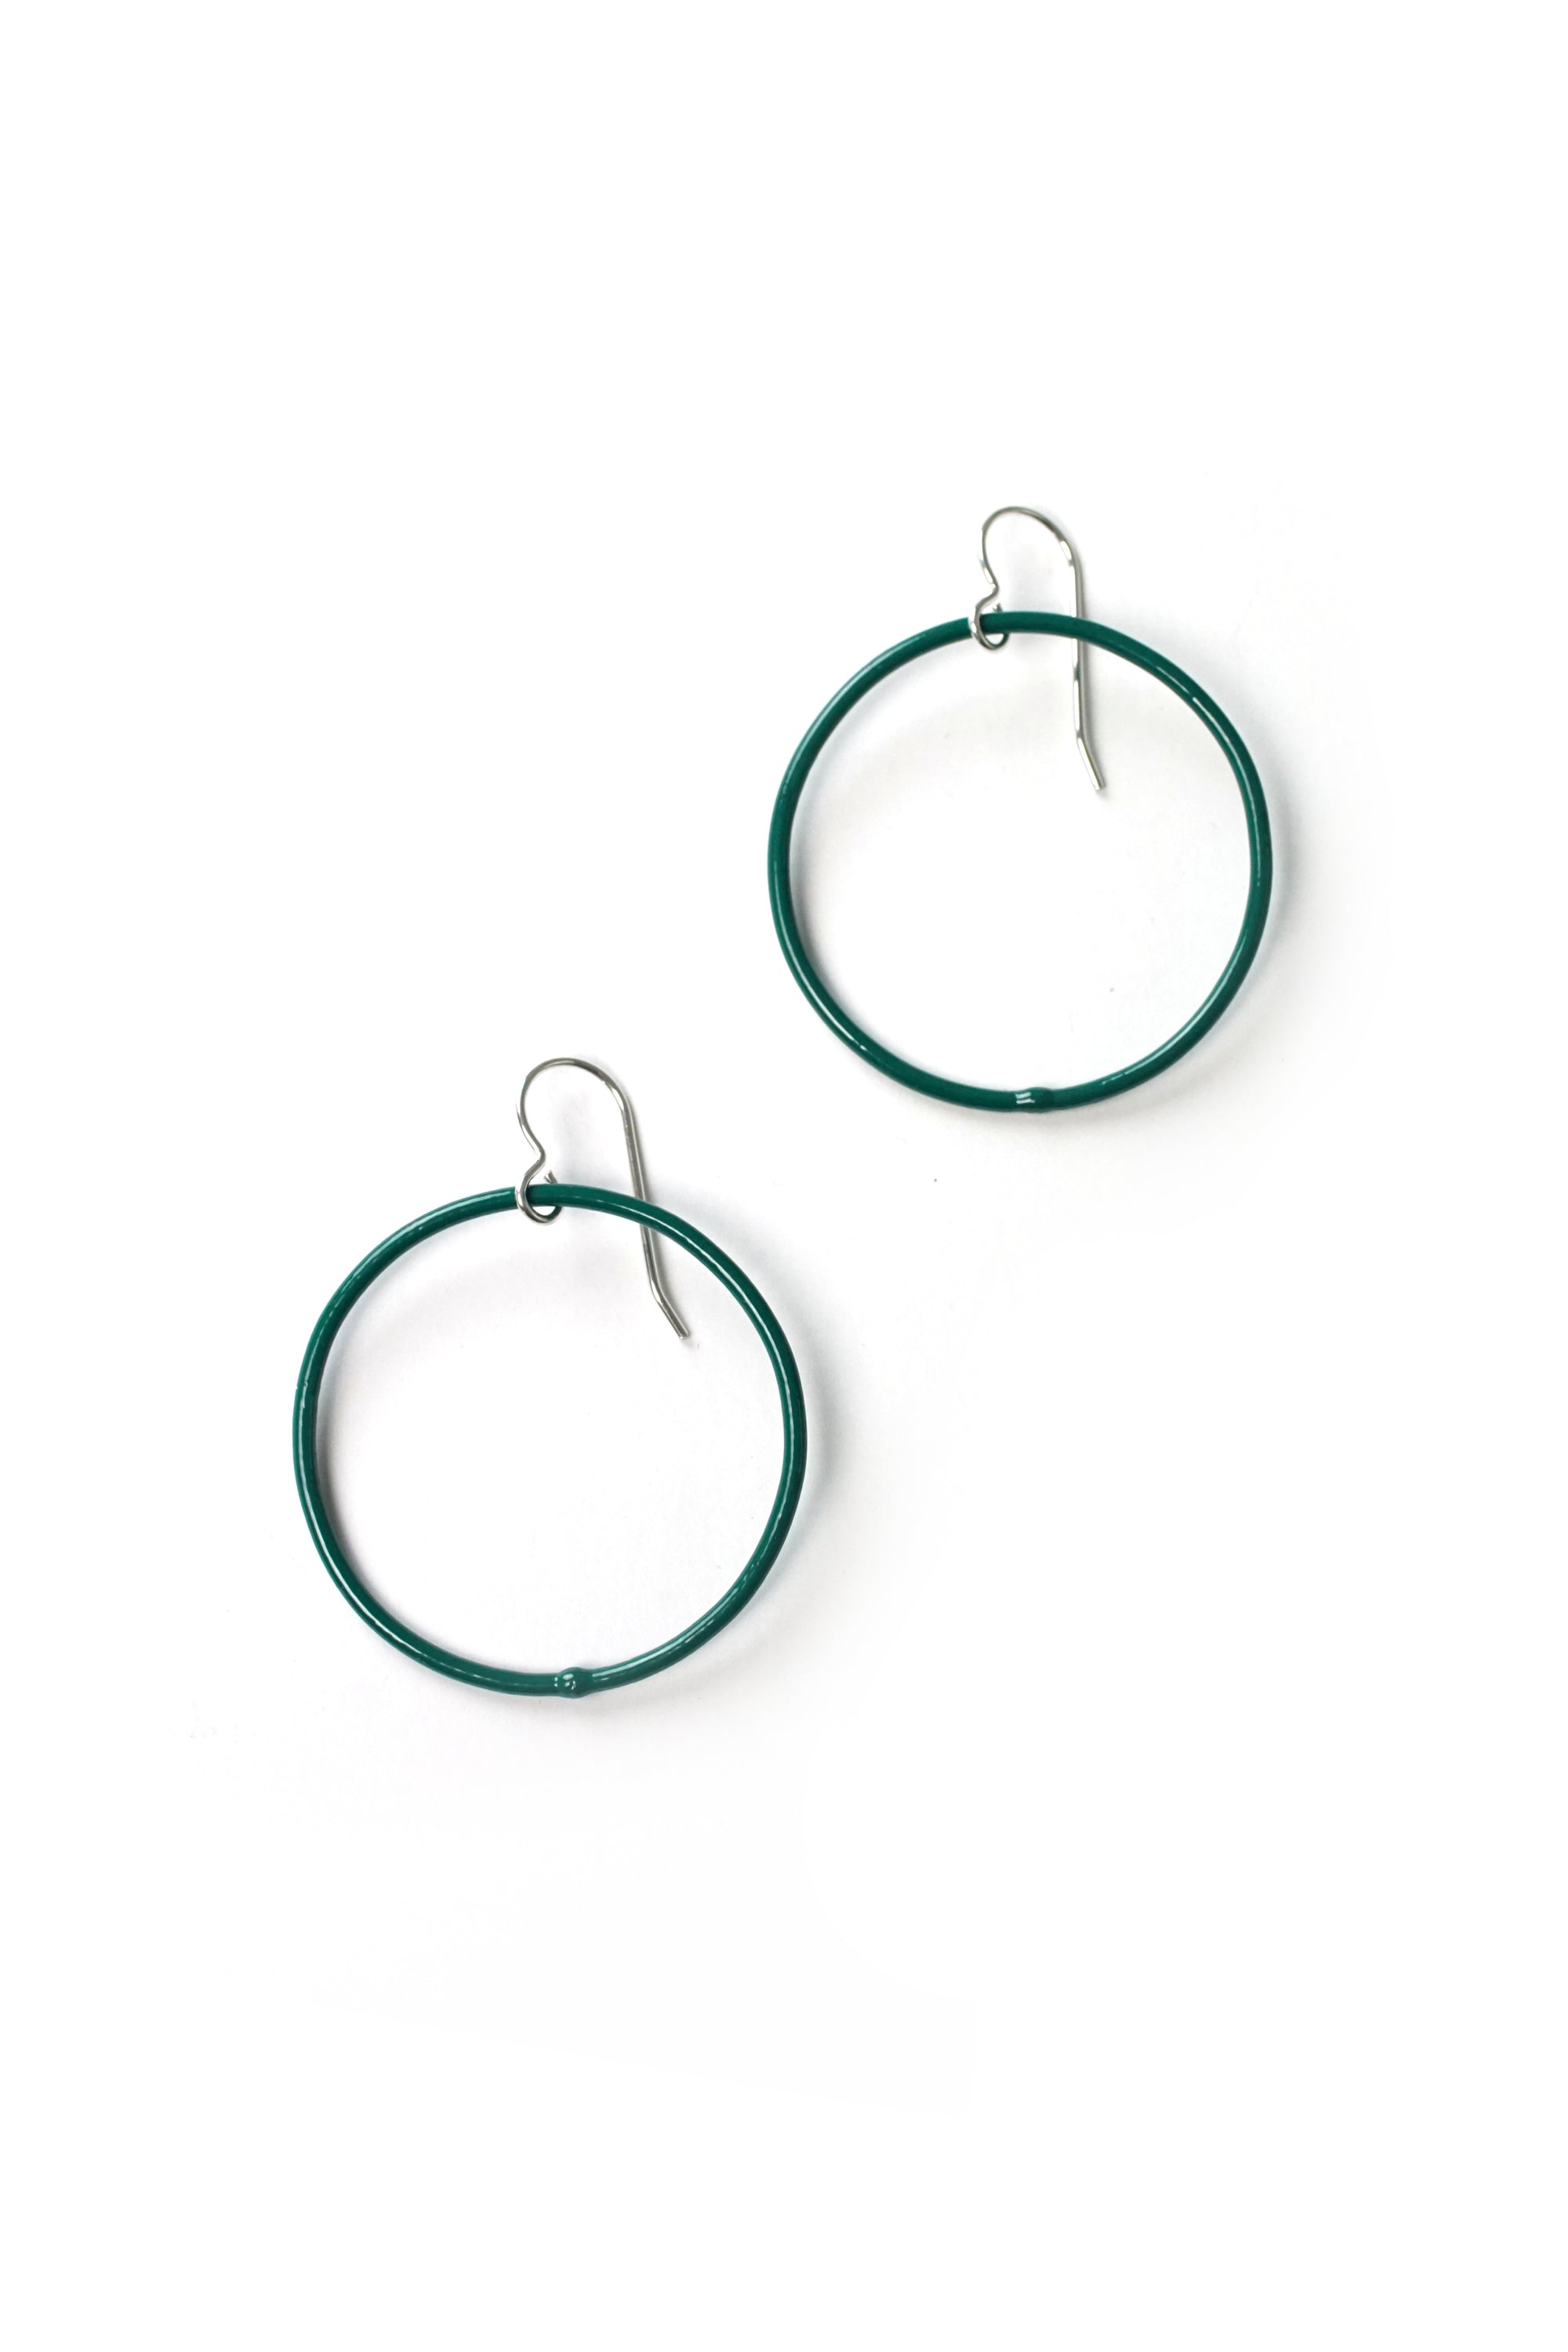 Medium Evident Earrings in Emerald Green